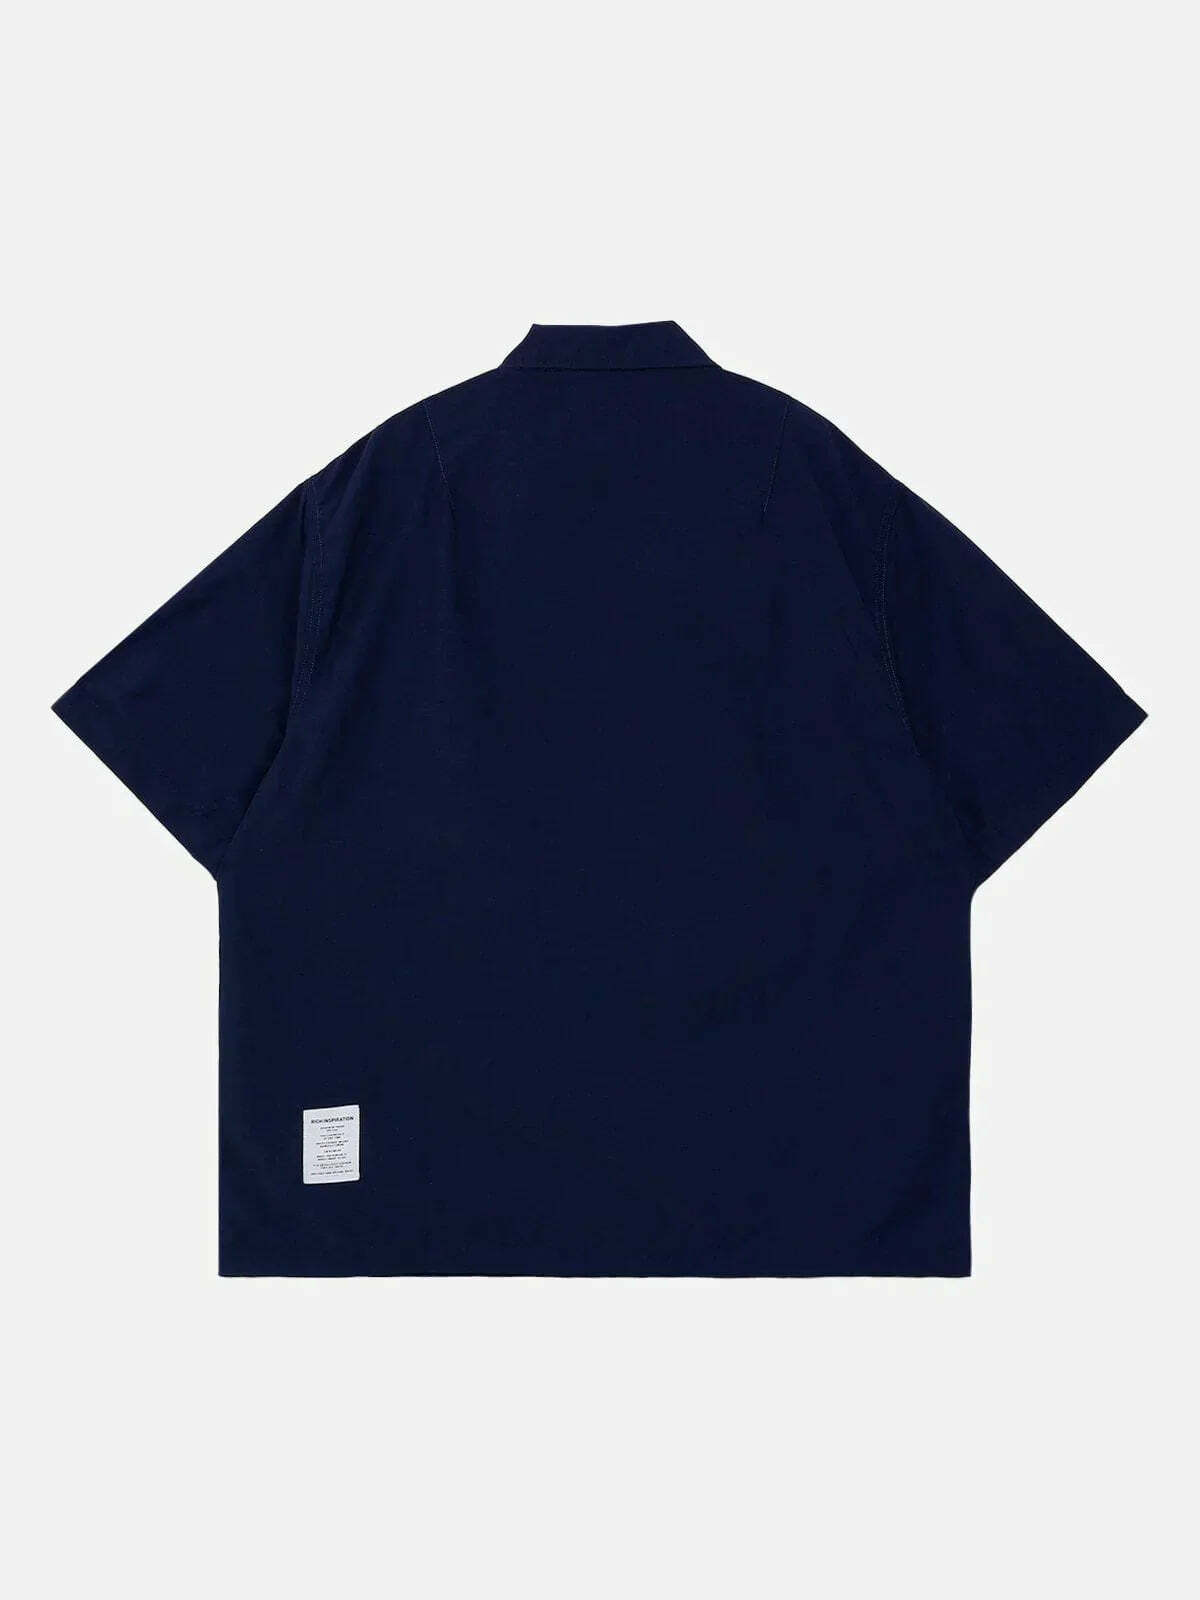 solid short sleeve shirt minimalist urban style 5349